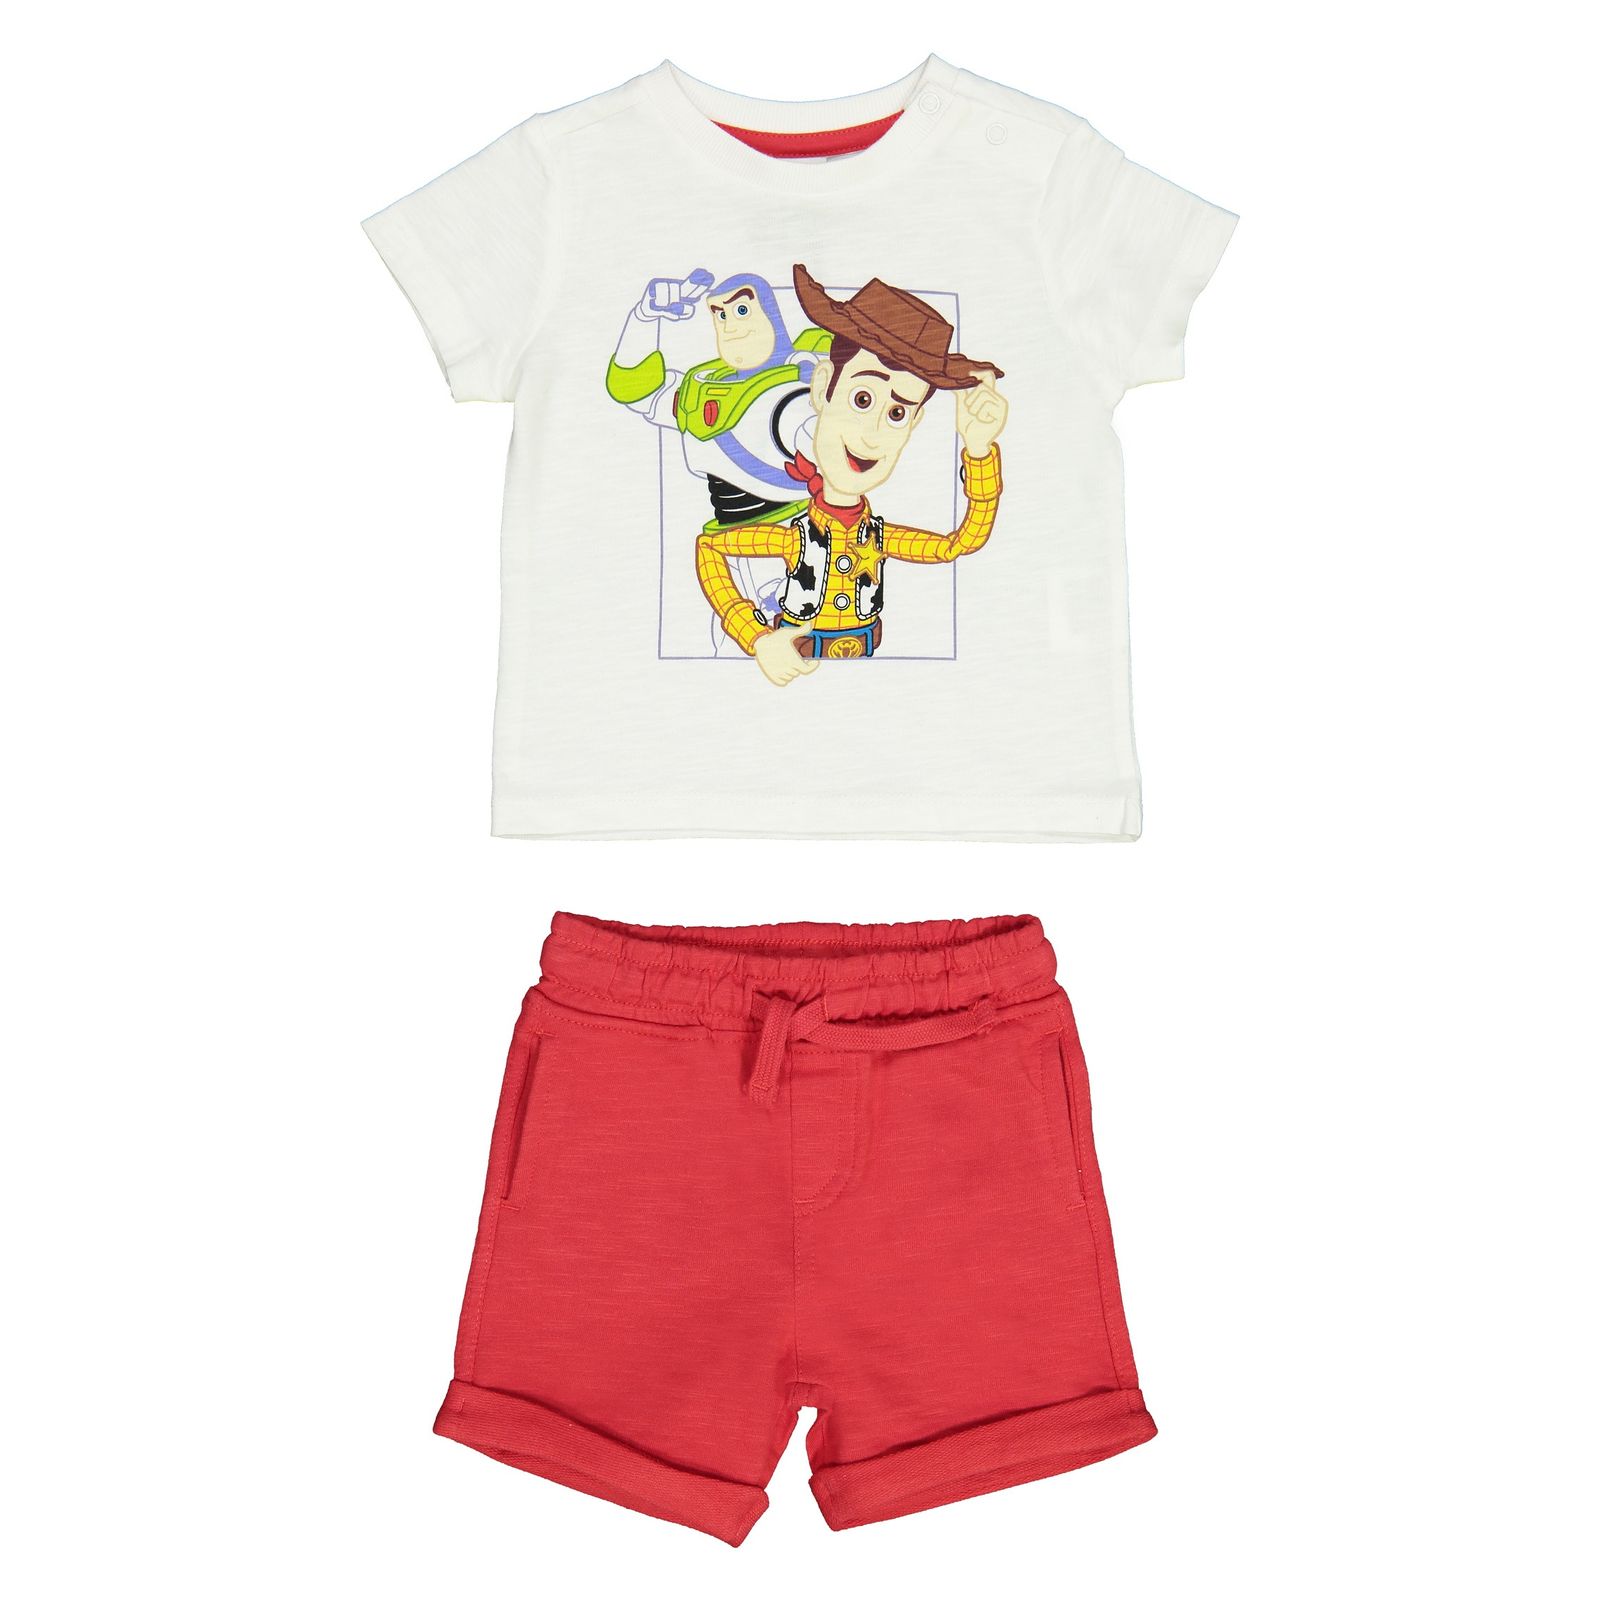 تی شرت و شلوارک نخی نوزادی پسرانه - بلوکیدز - سفيد/قرمز - 2